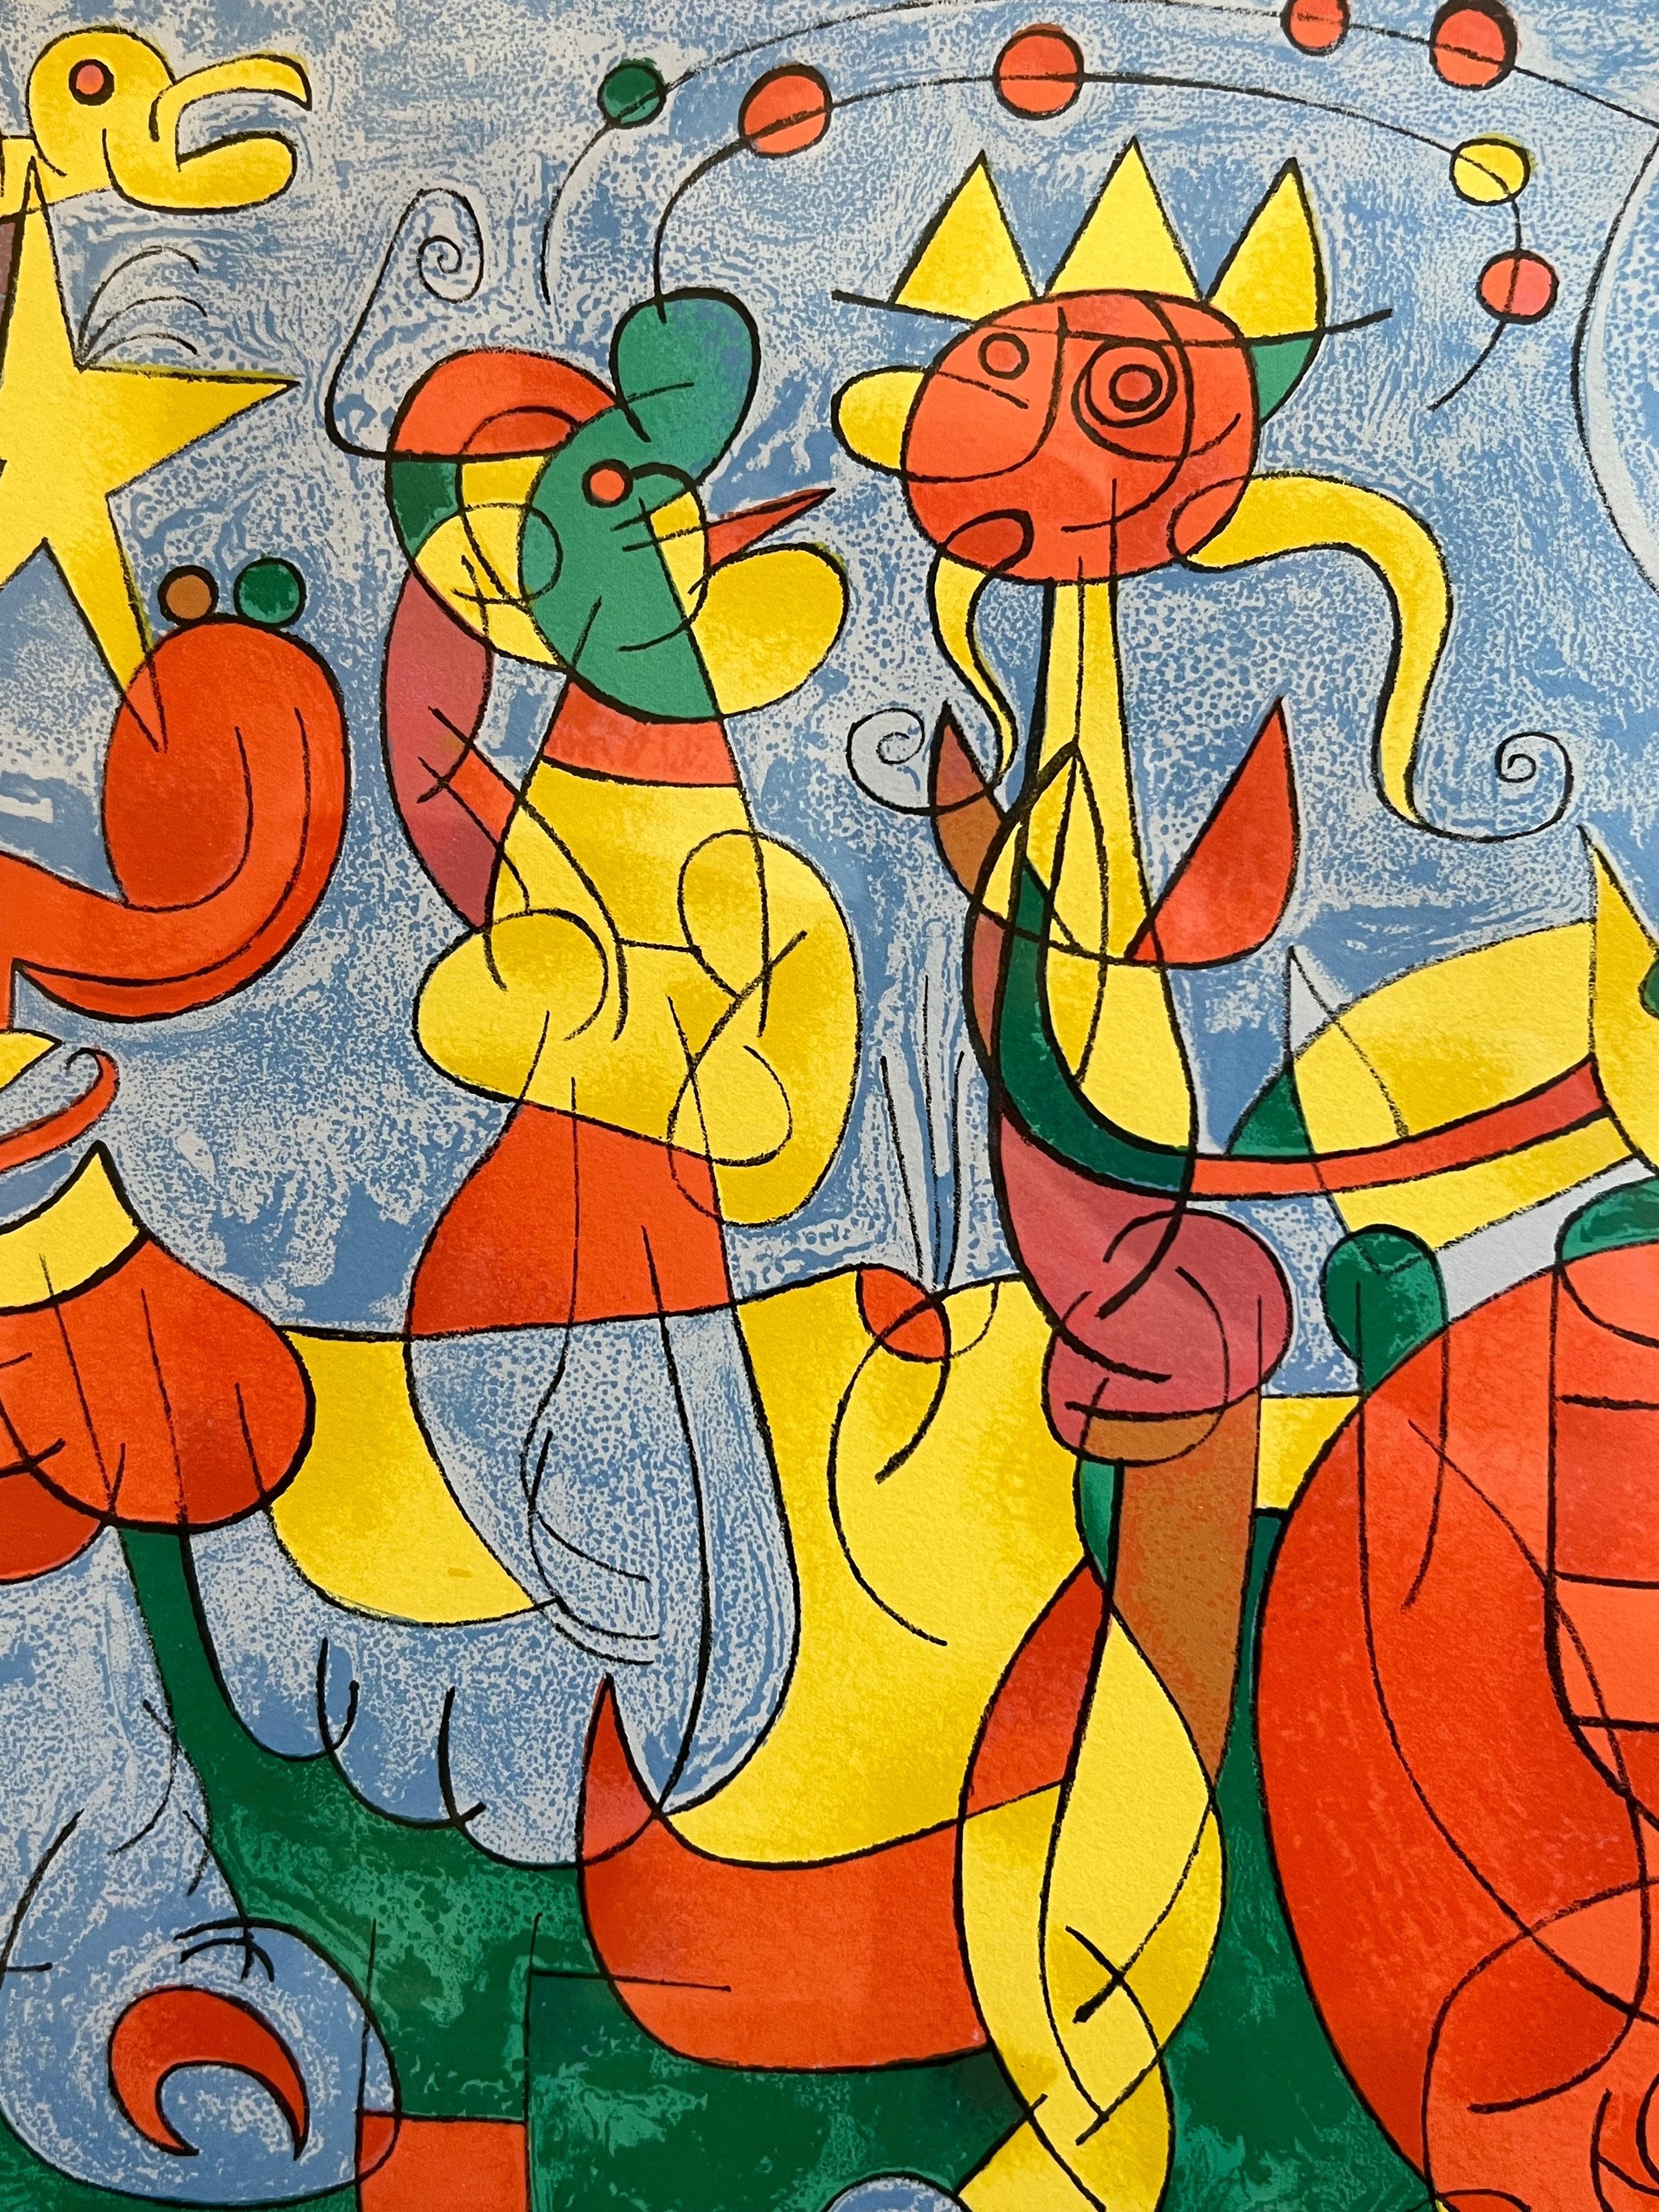 Large 1966 SURREAL Joan Miro Ubu roi (King Ubu): plate 3 LITHOGRAPH Colored - Print by Joan Miró